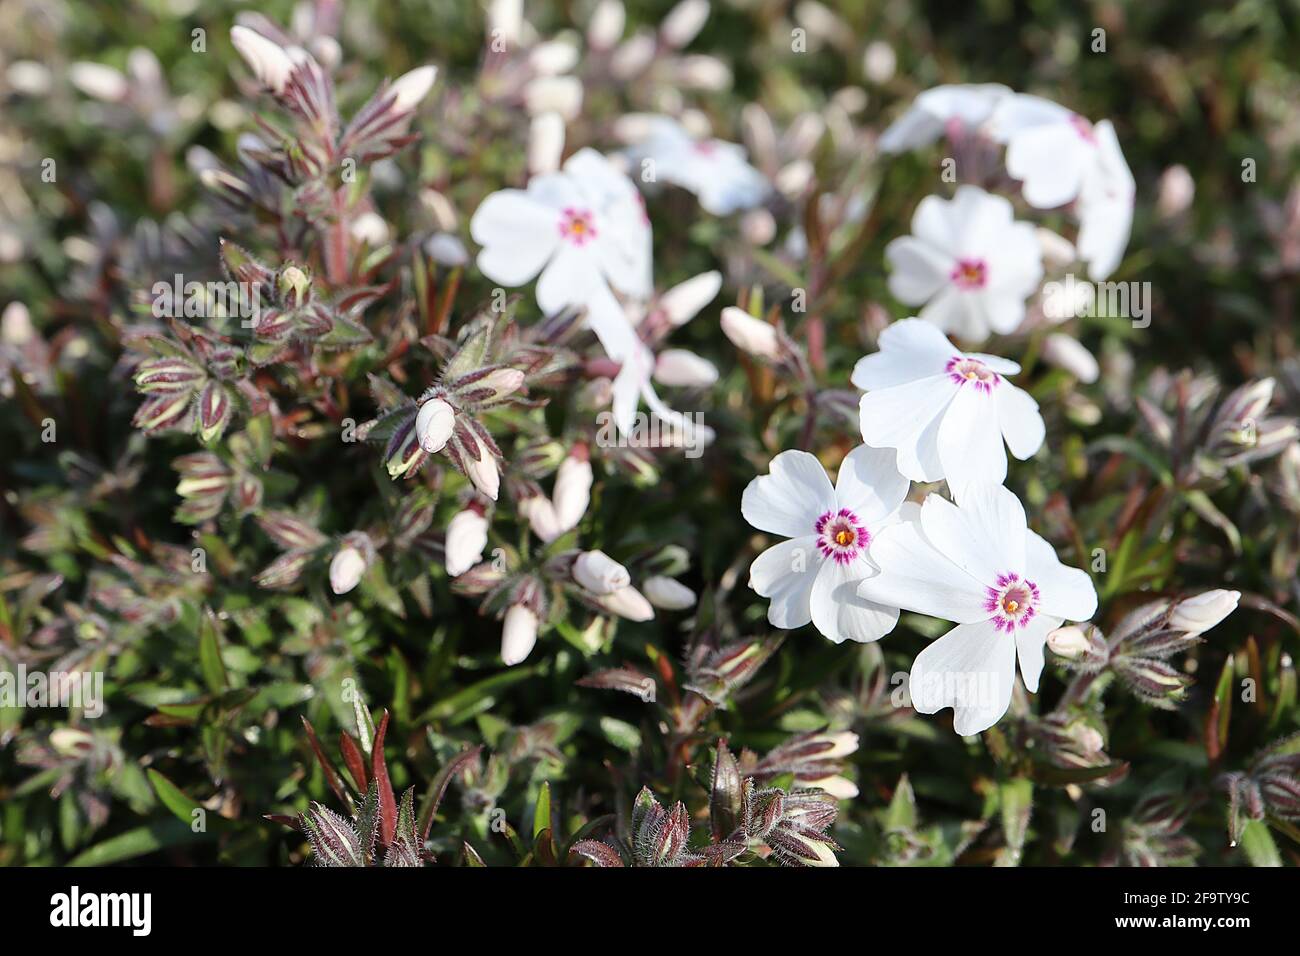 Phlox subulata ‘Maischnee’ Moss phlox Maischnee – white flowers with basal crimson spots,  April, England, UK Stock Photo